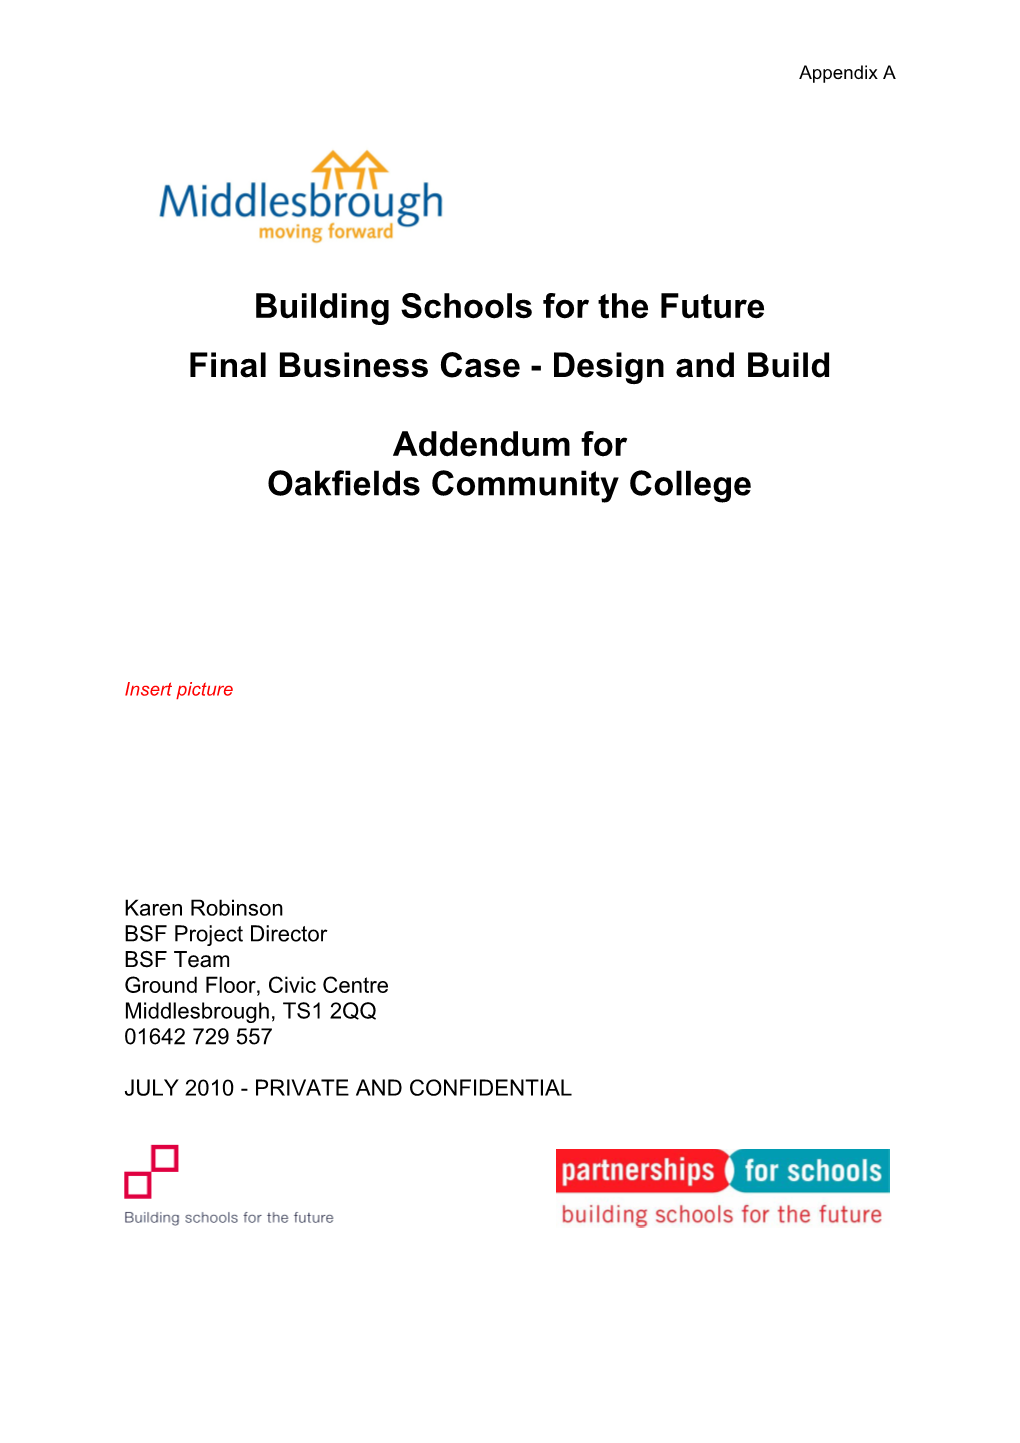 Building Schools for the Future